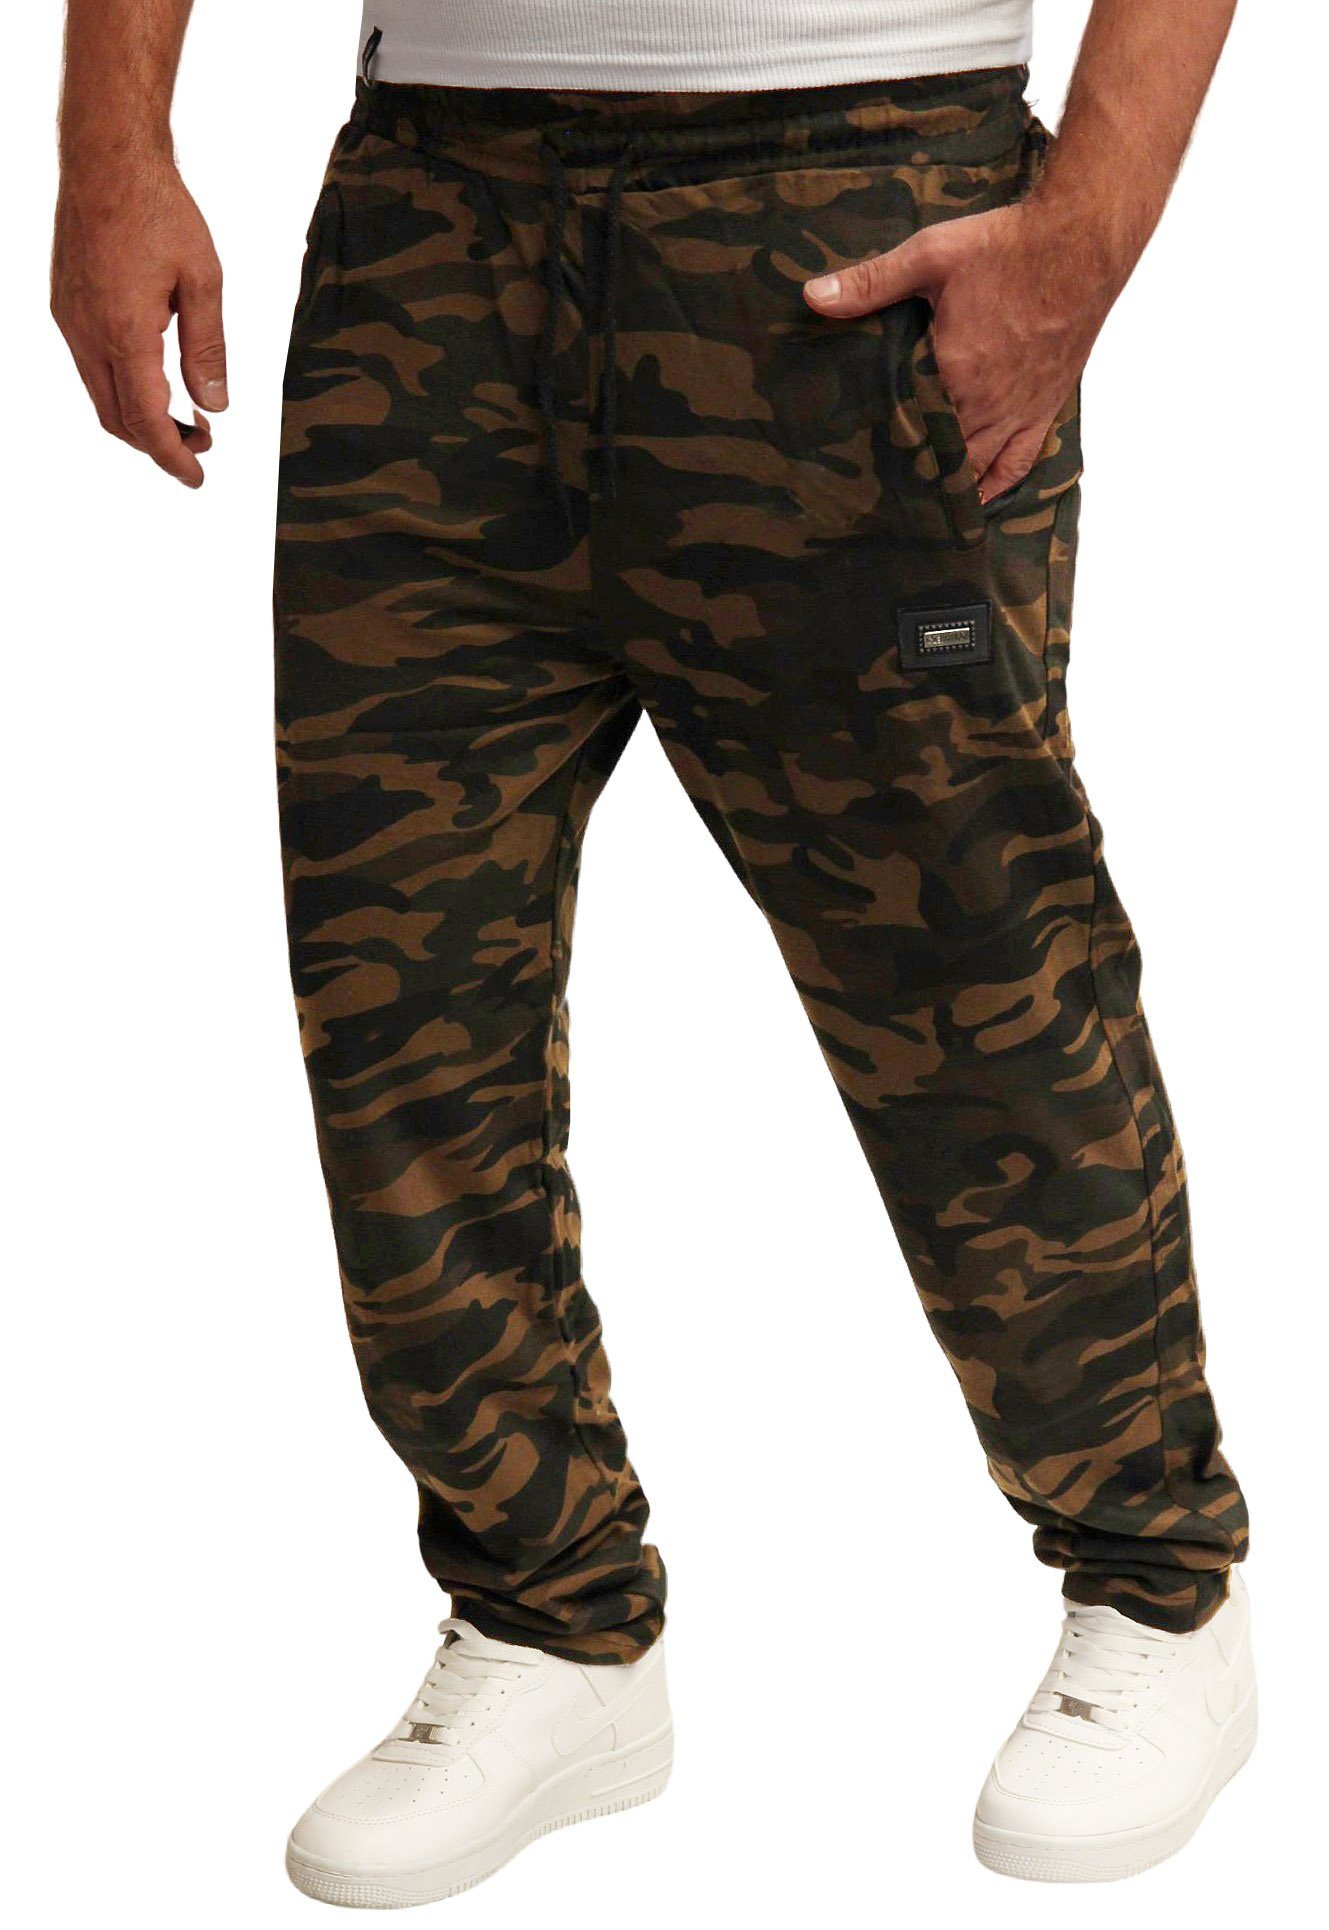 Jogginghose Jogginghose Tarn Trainingshose Camouflage Fitnesshose Hose Herren Army RMK (2007) Camouflage-Grün